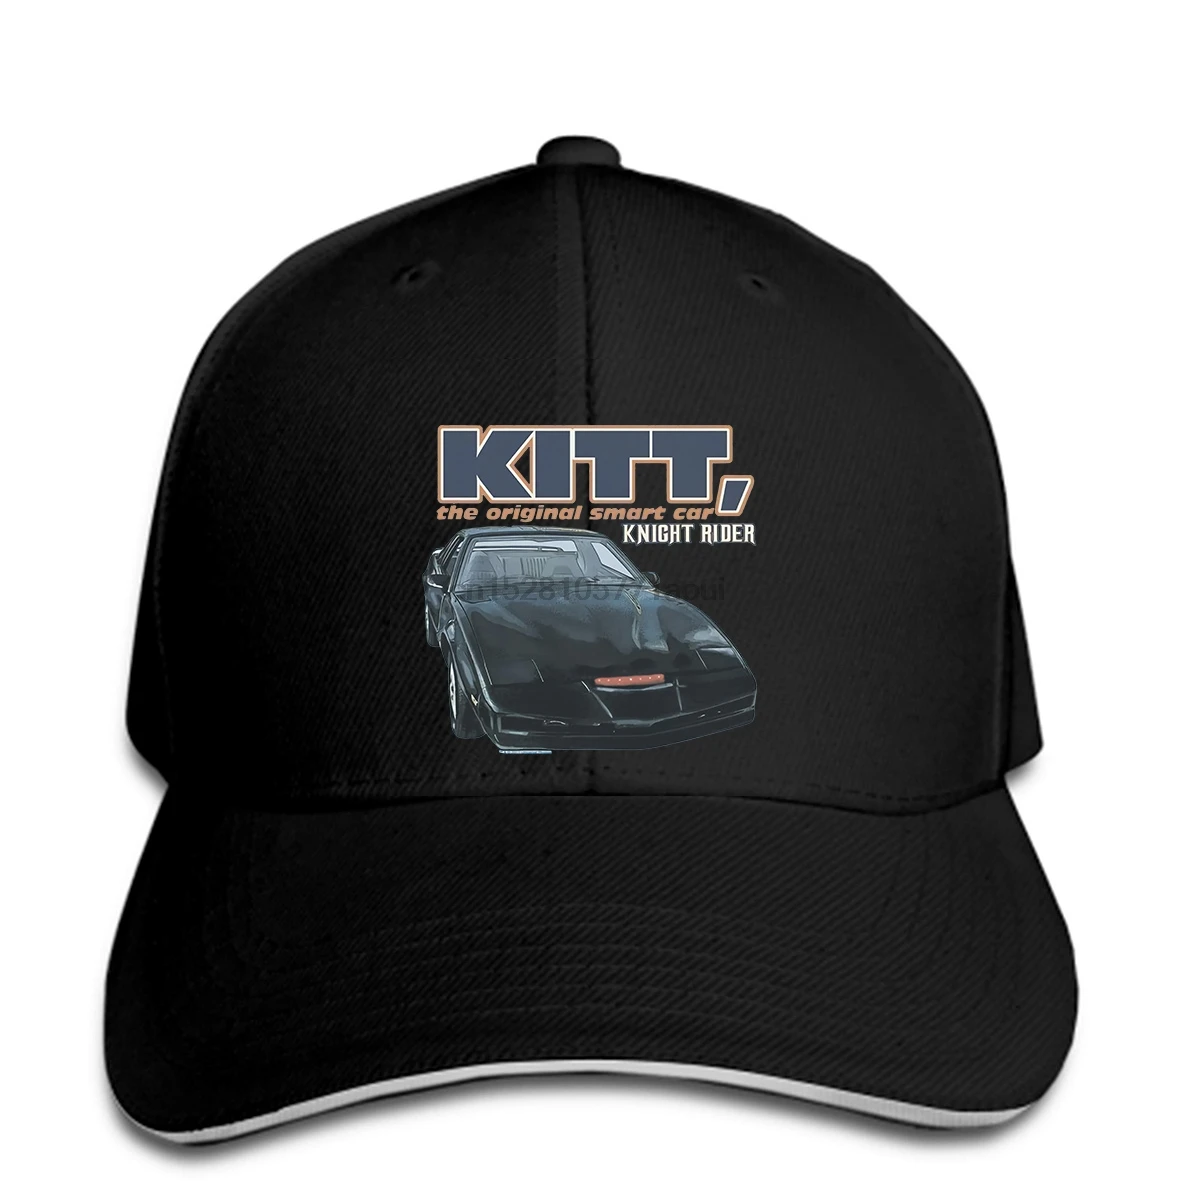 Бейсболка Knight Rider KITT оригинальная бейсболка SMART CAR для взрослых | Аксессуары